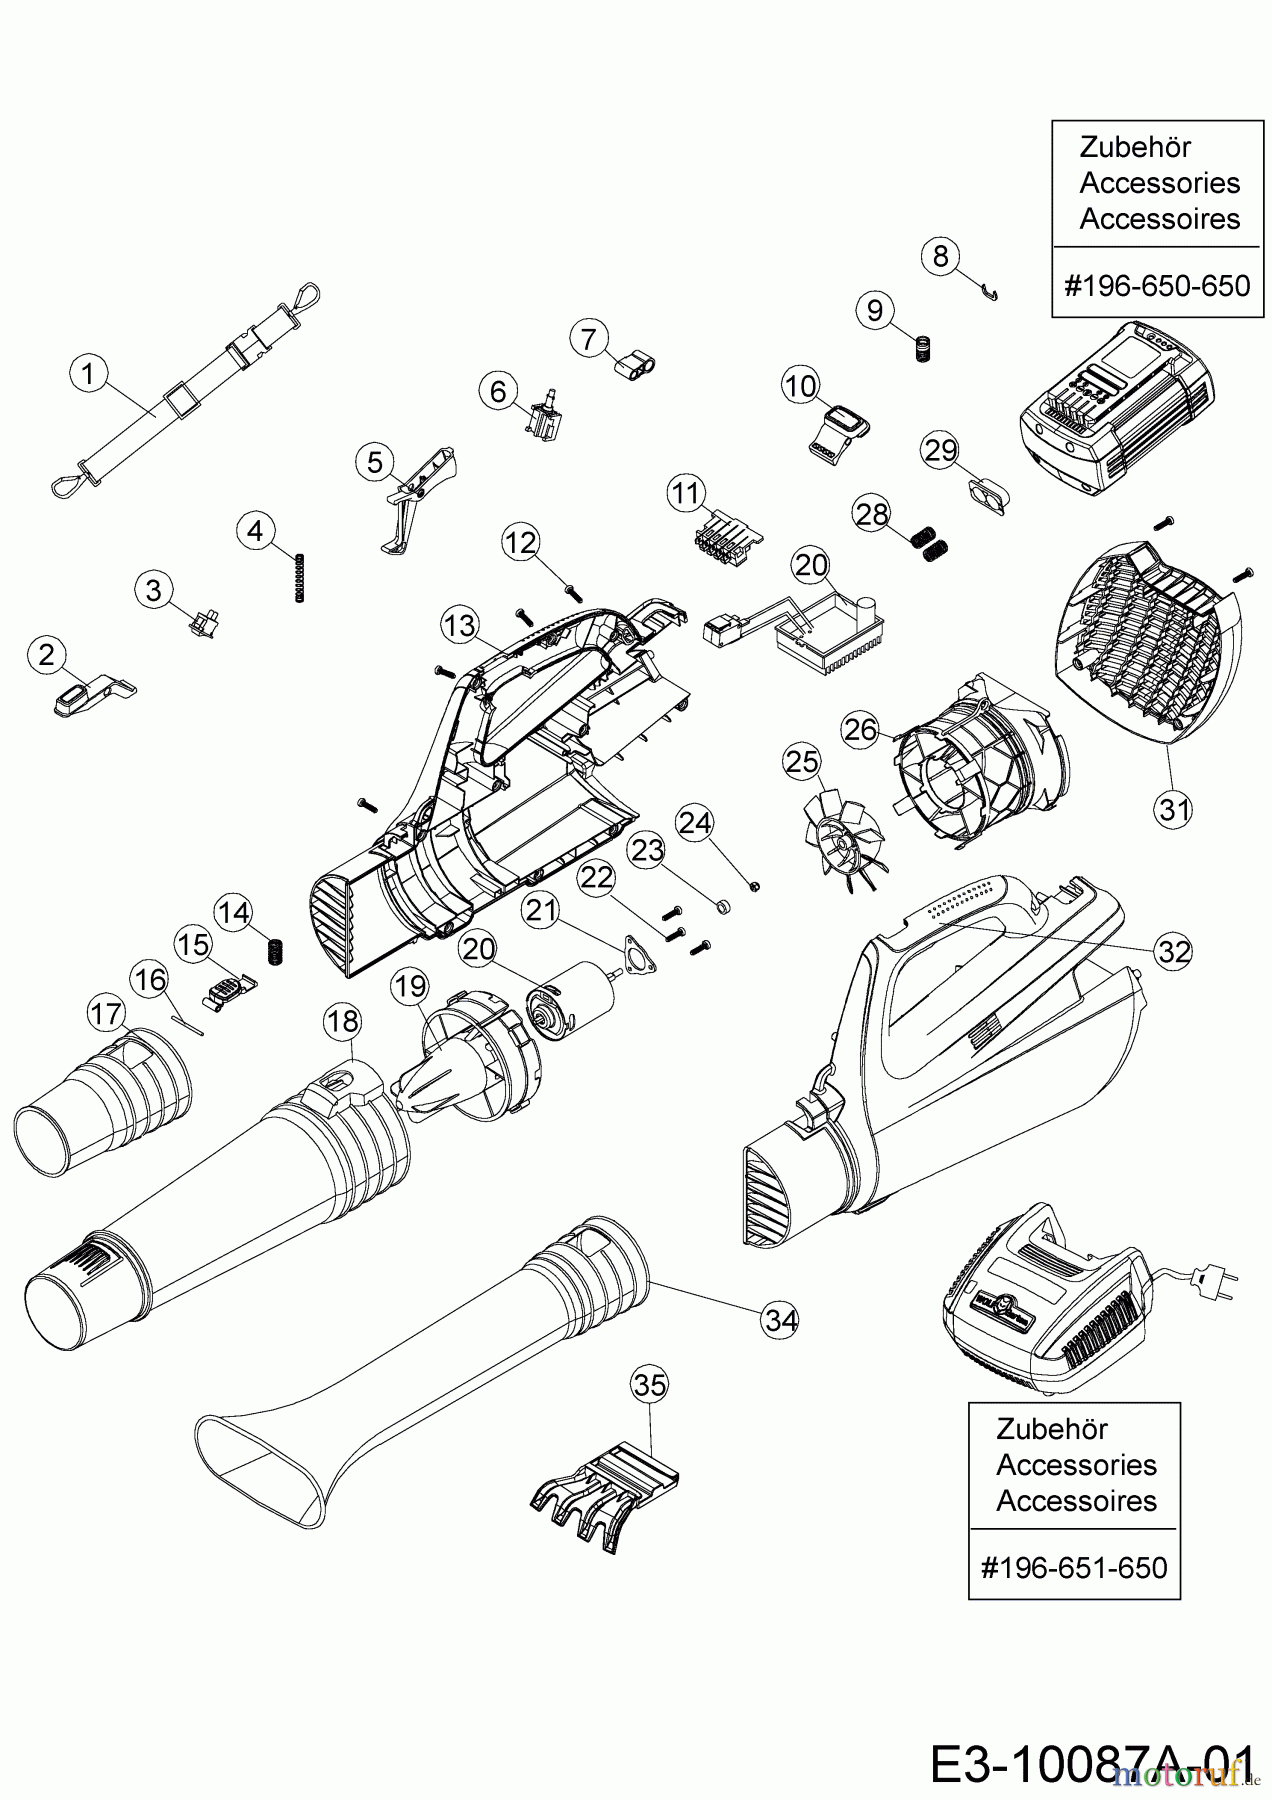  Wolf-Garten battery leaf blower 72V Li-Ion Power 24 B 41AA0BN-650  (2018) Basic machine